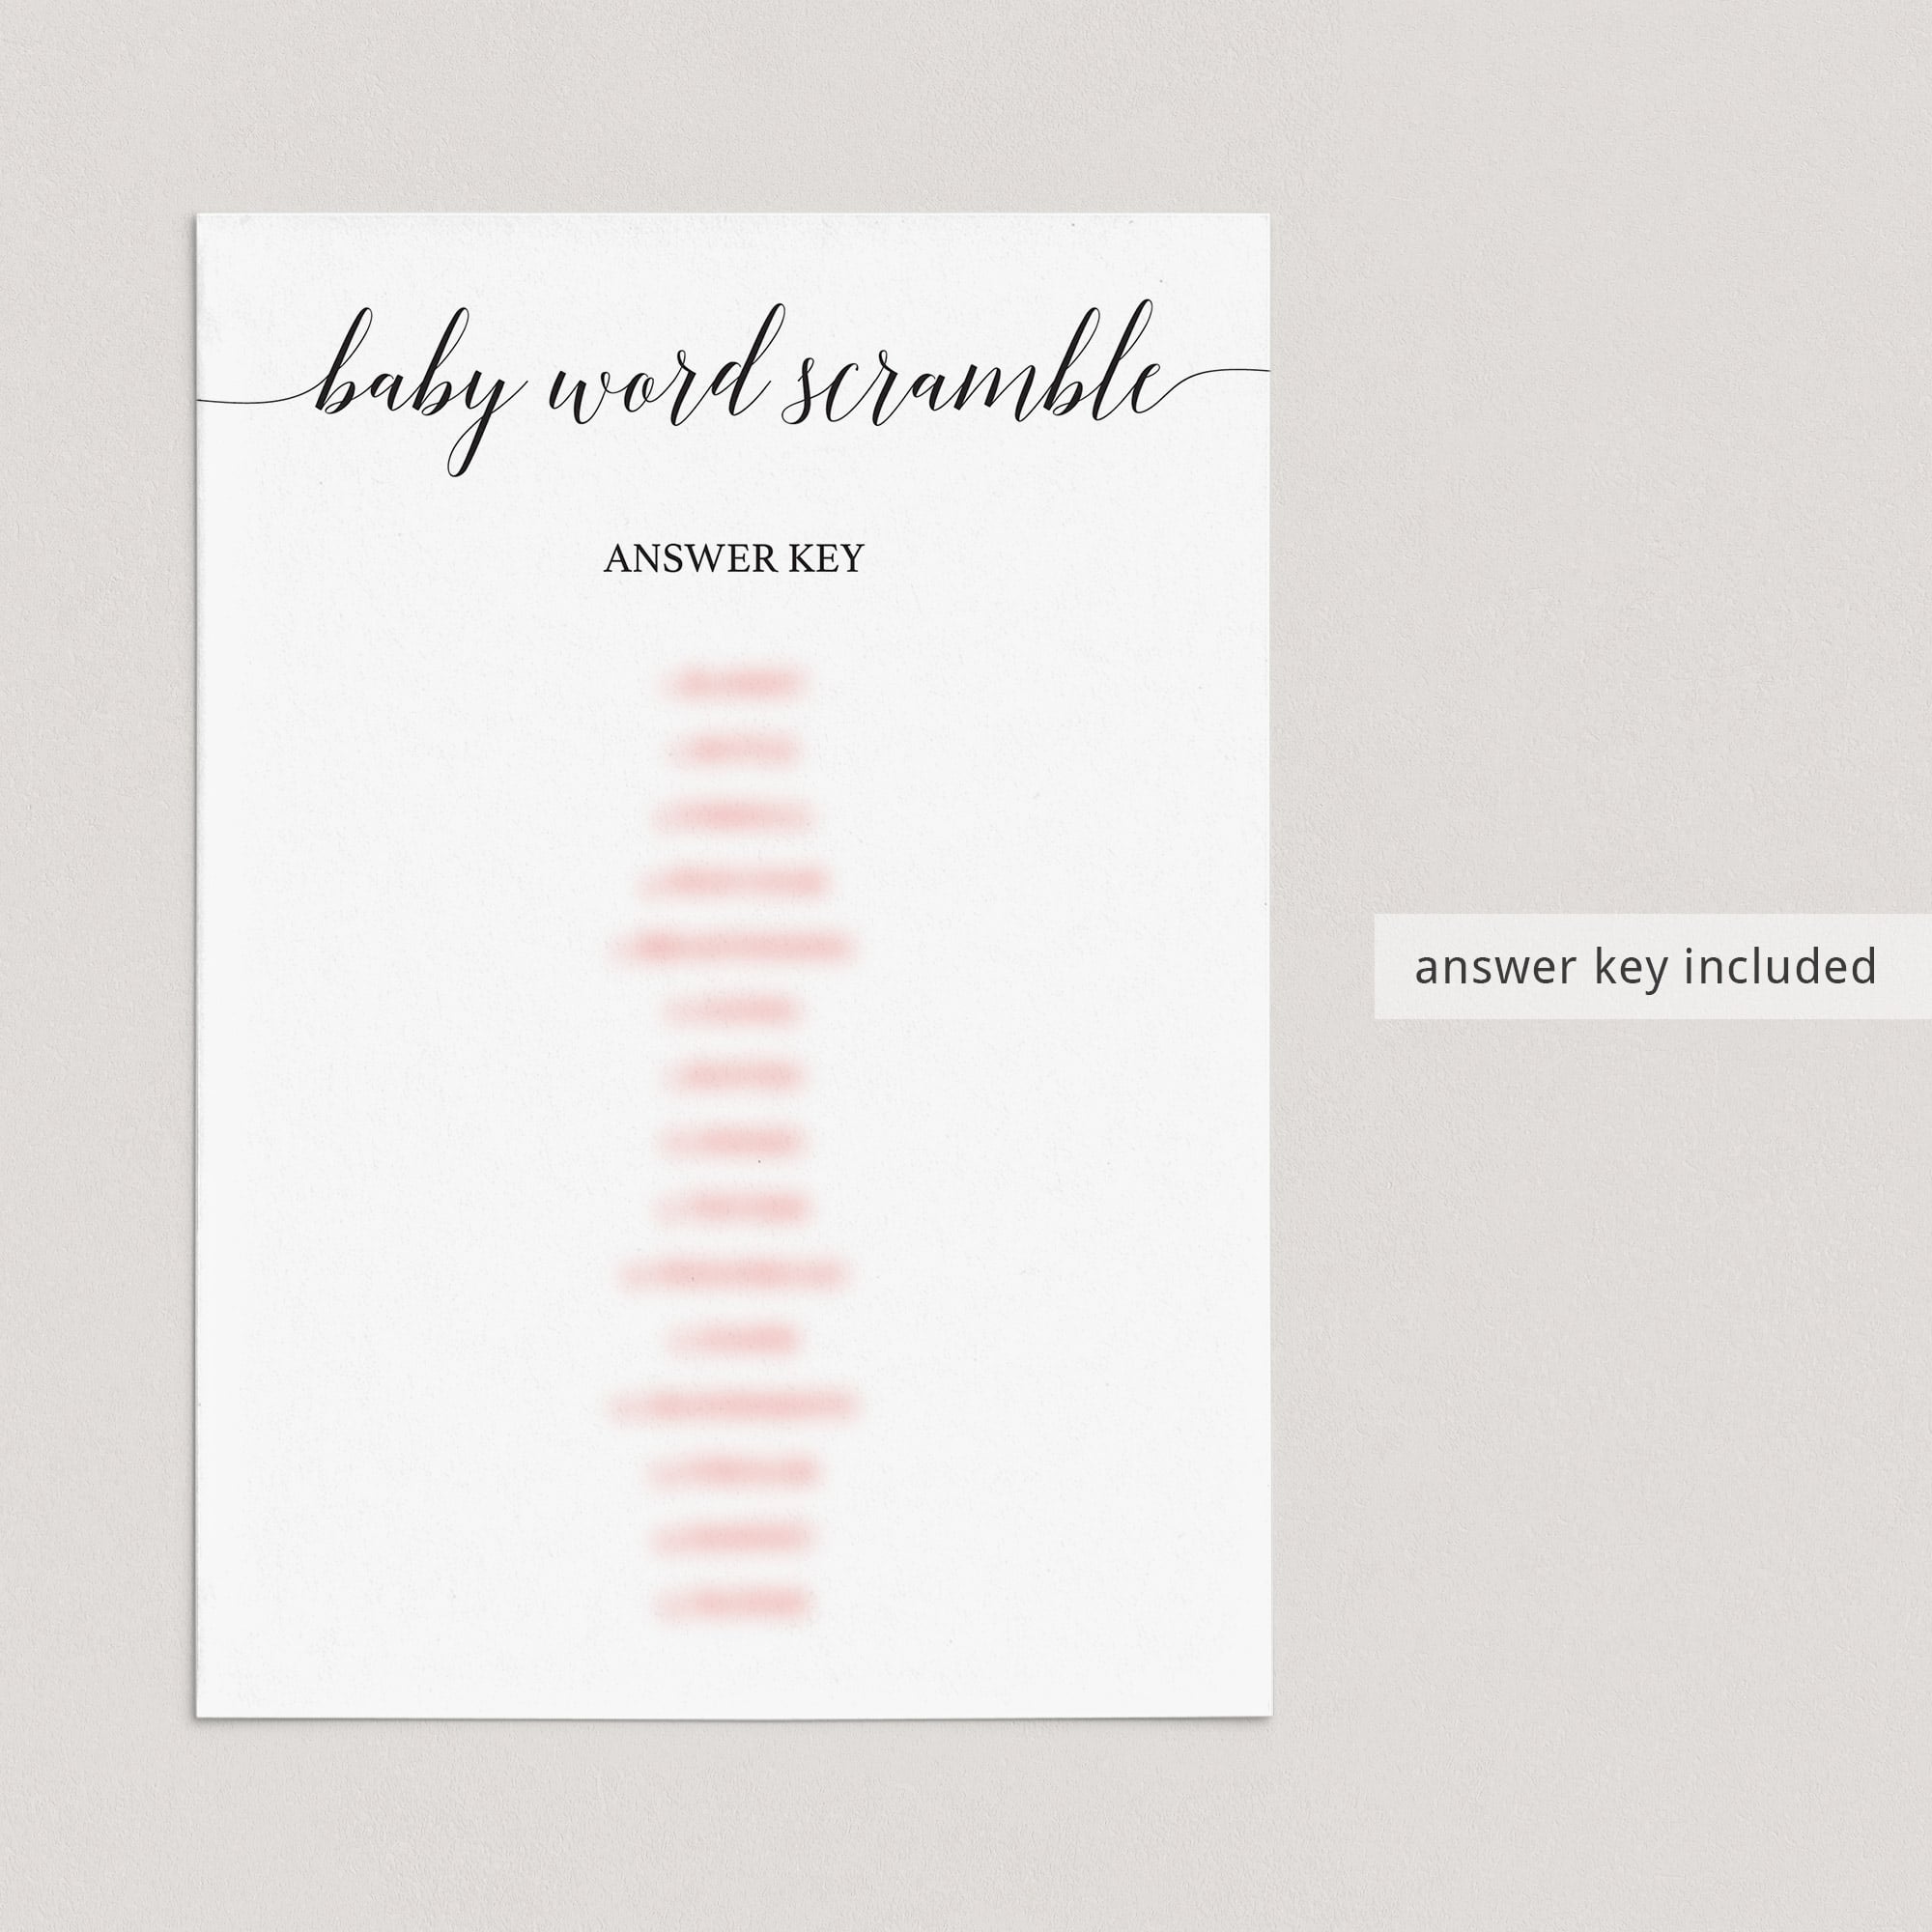 Baby word scramble answer key by LittleSizzle